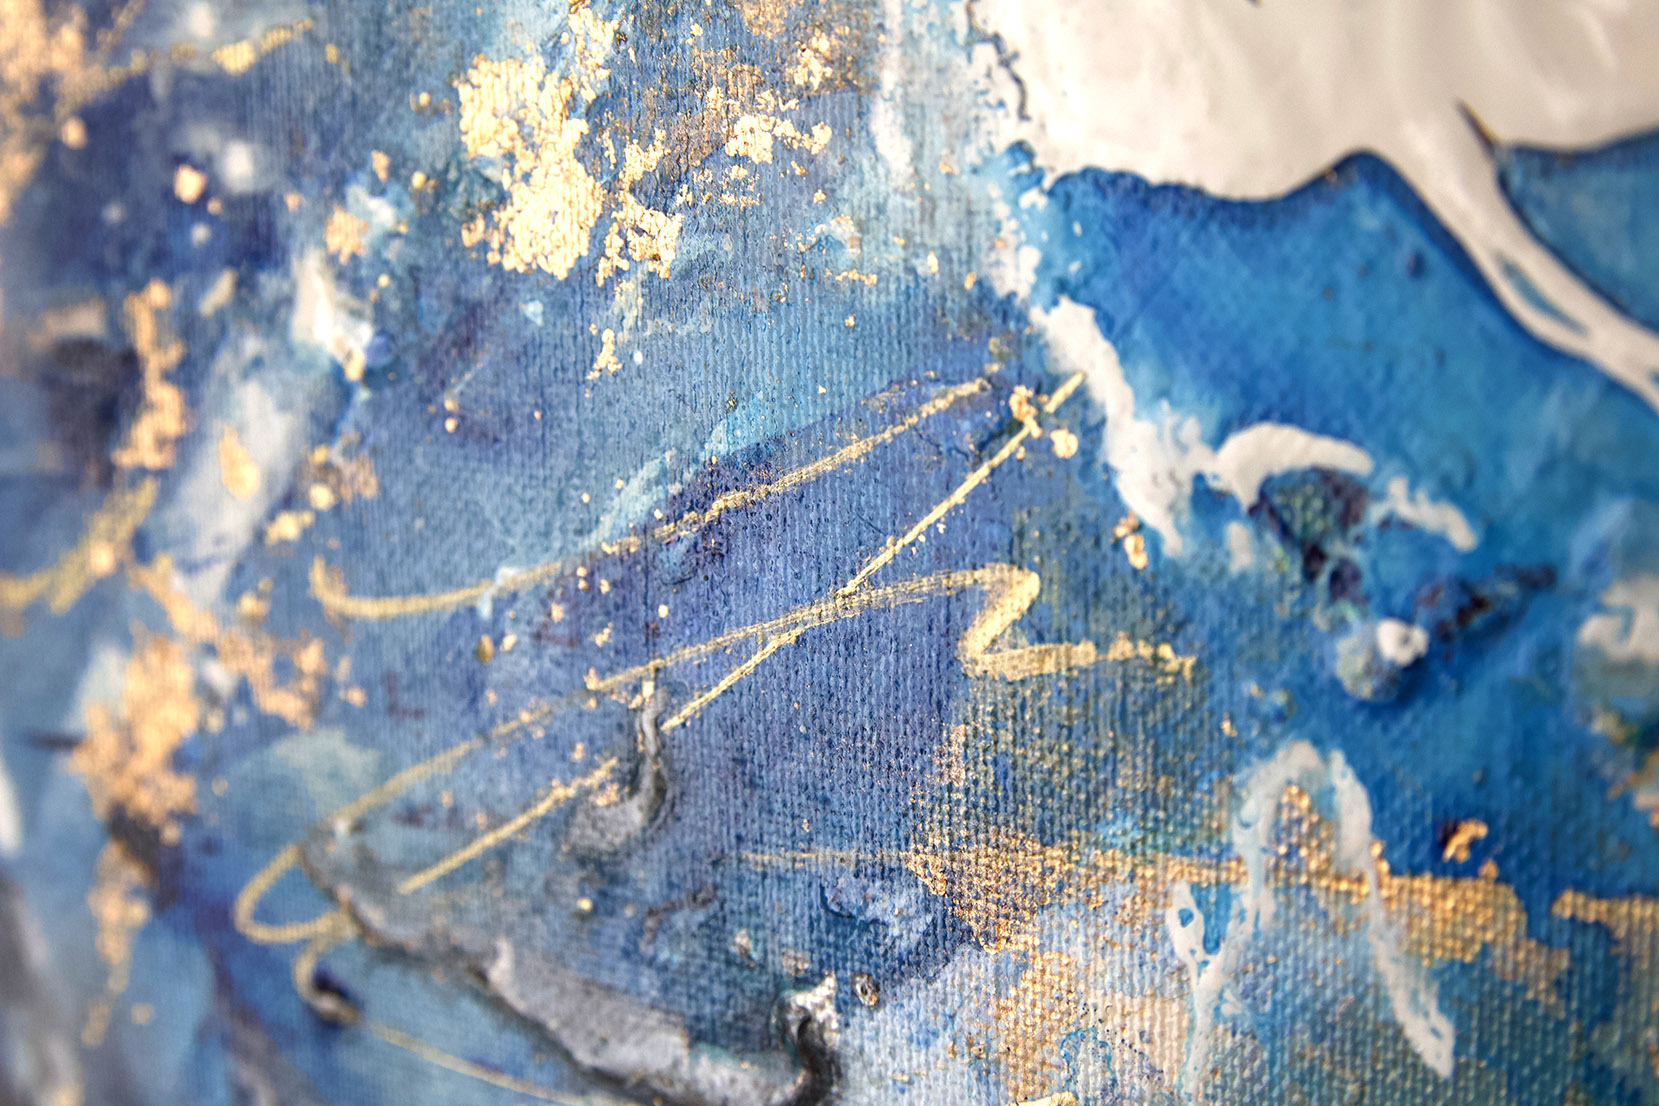 「Remembering blue」H34×W45cm, Acrylic paint, Plating pigment, Canvas, 2022